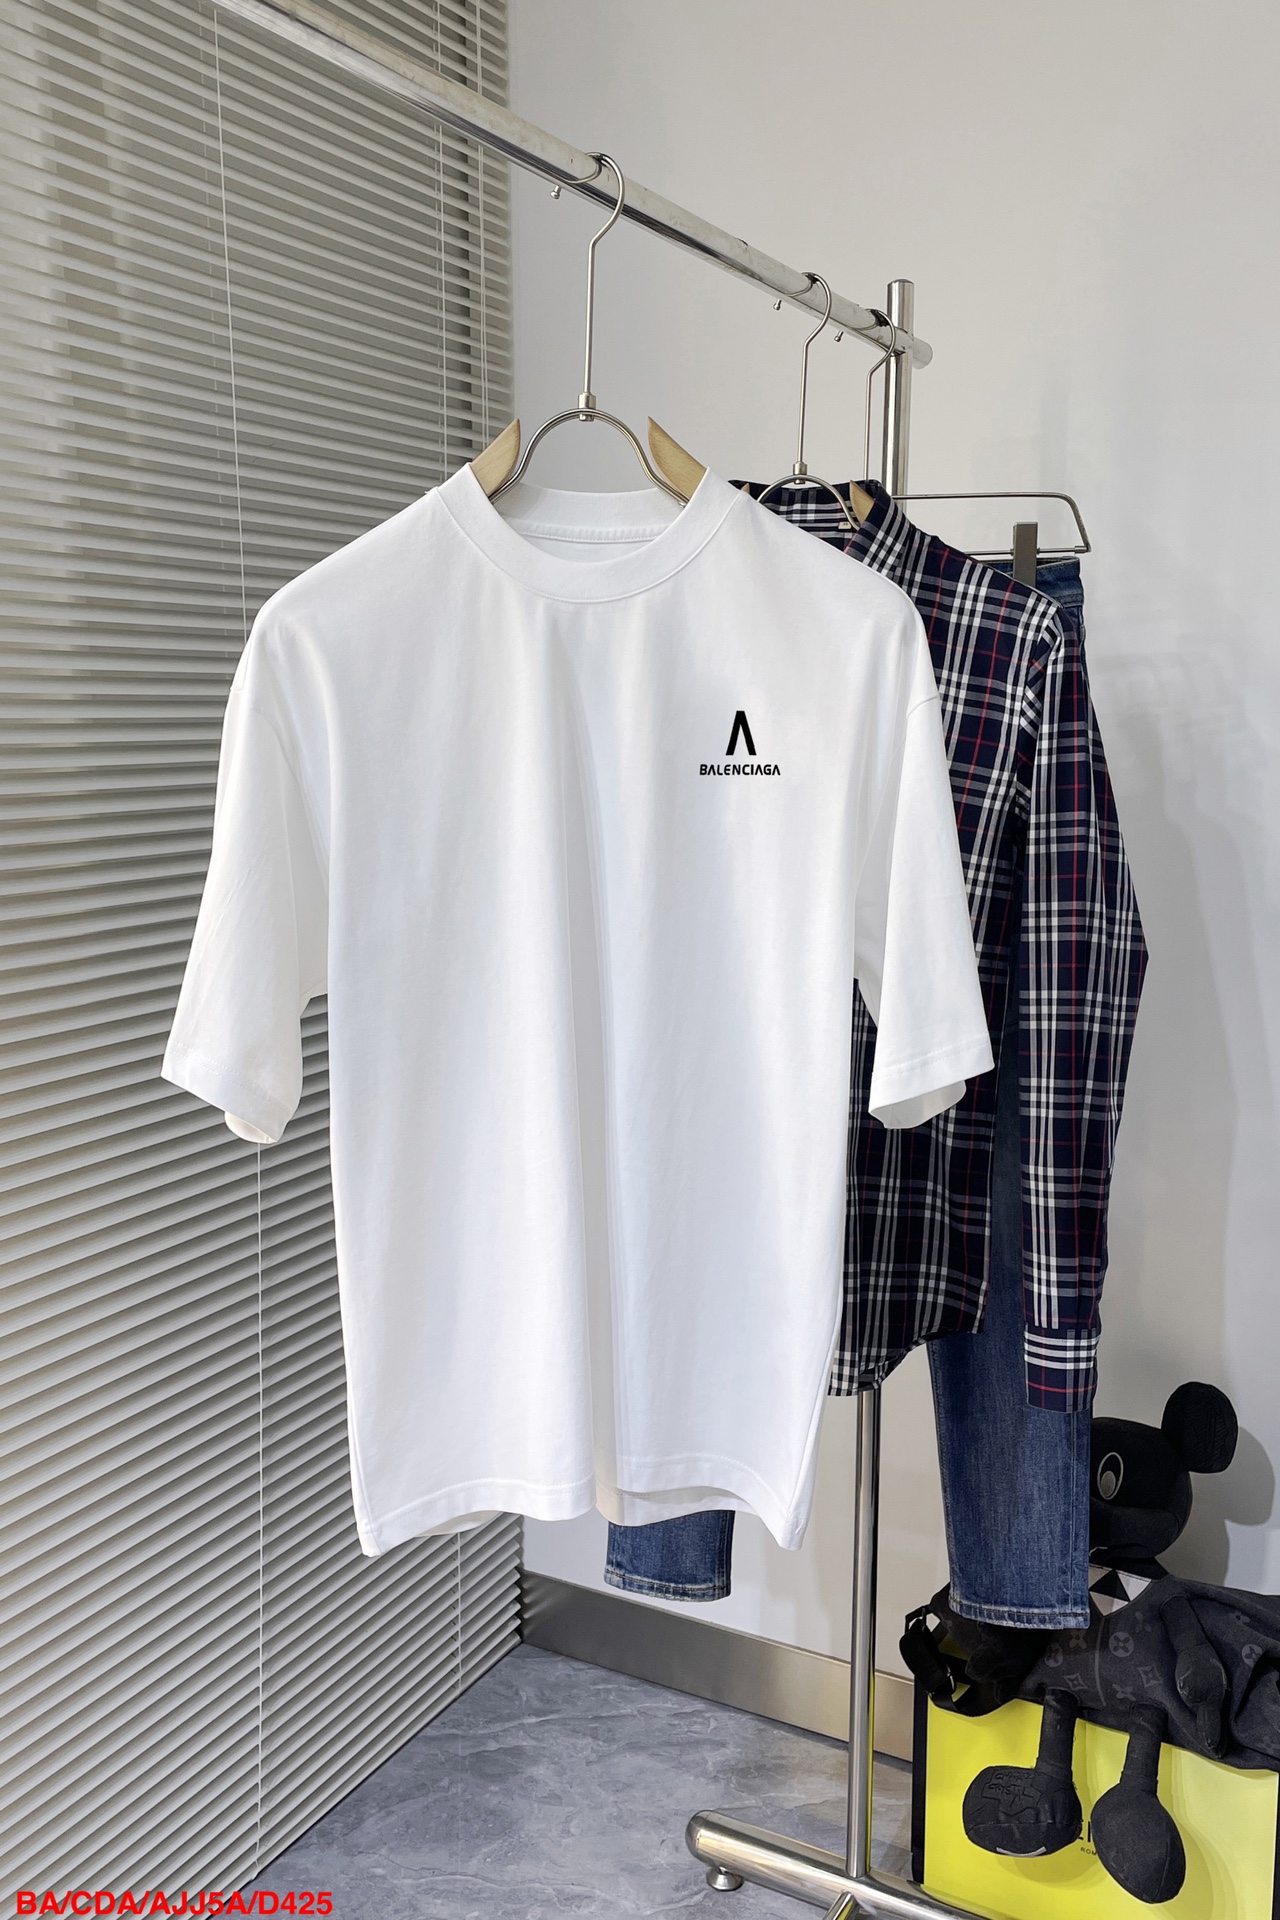 Balenciaga Clothing T-Shirt Black White Printing Cotton Short Sleeve